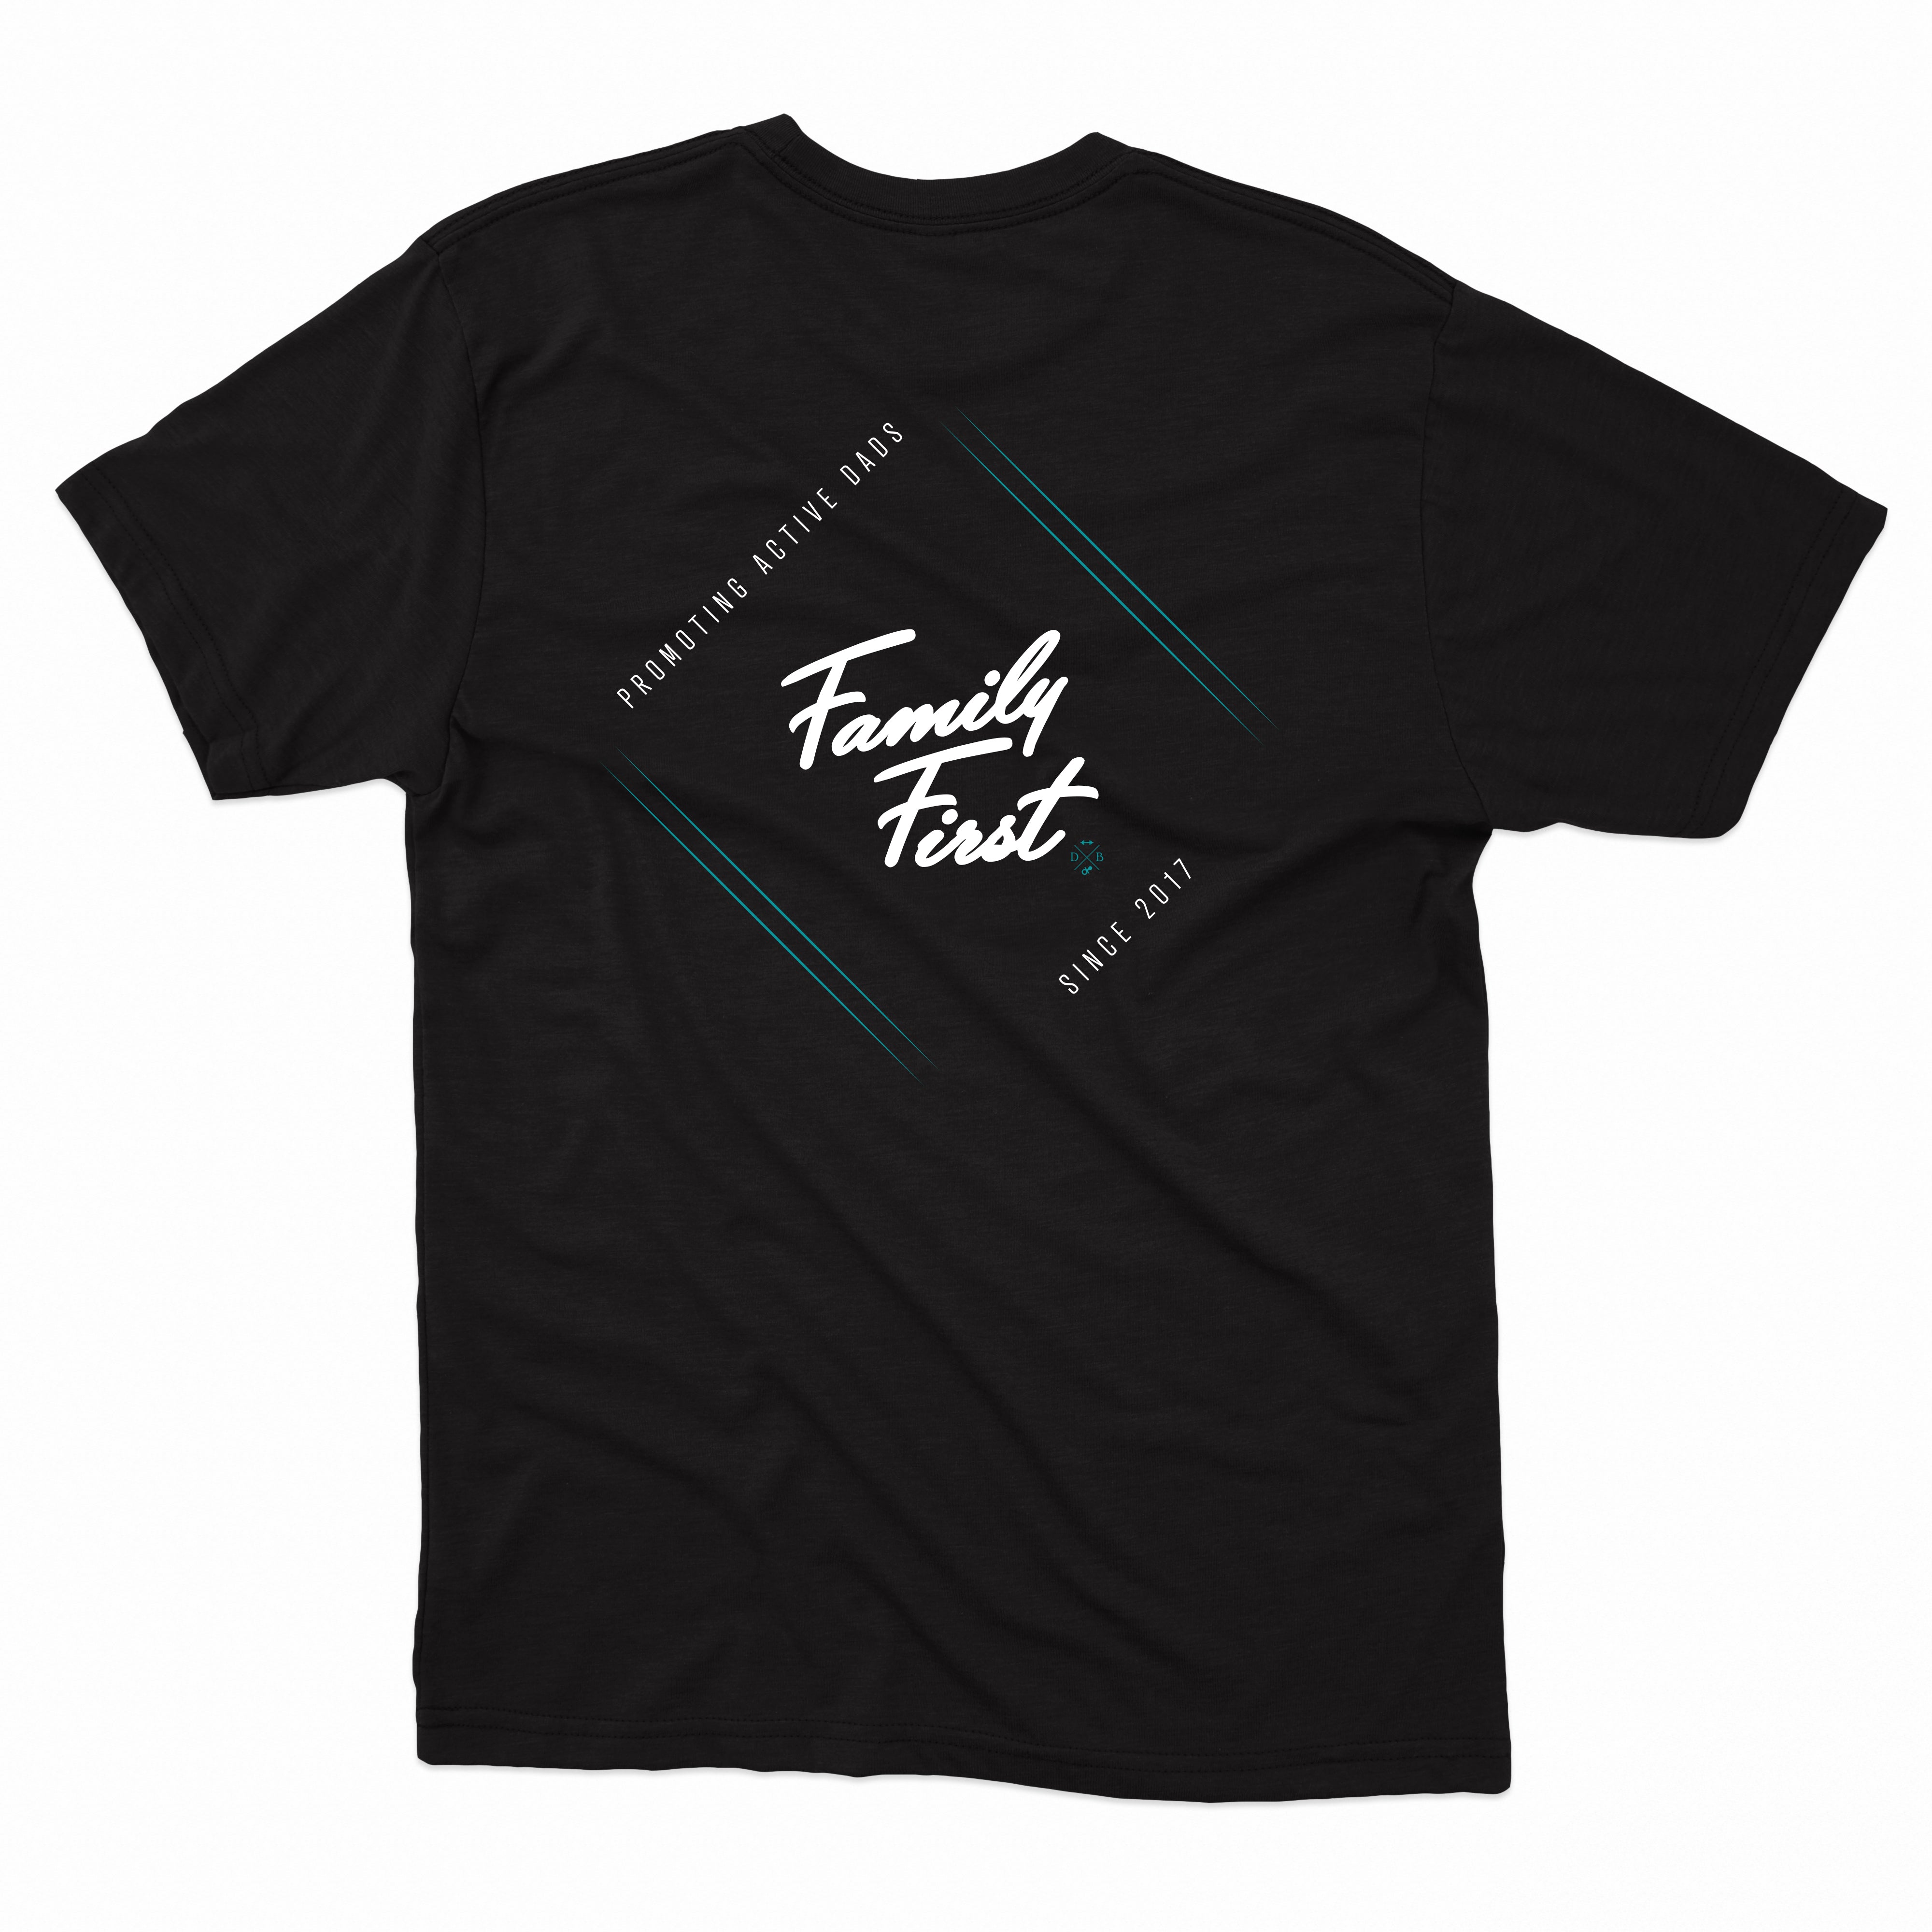 Family First Shirt (Black)